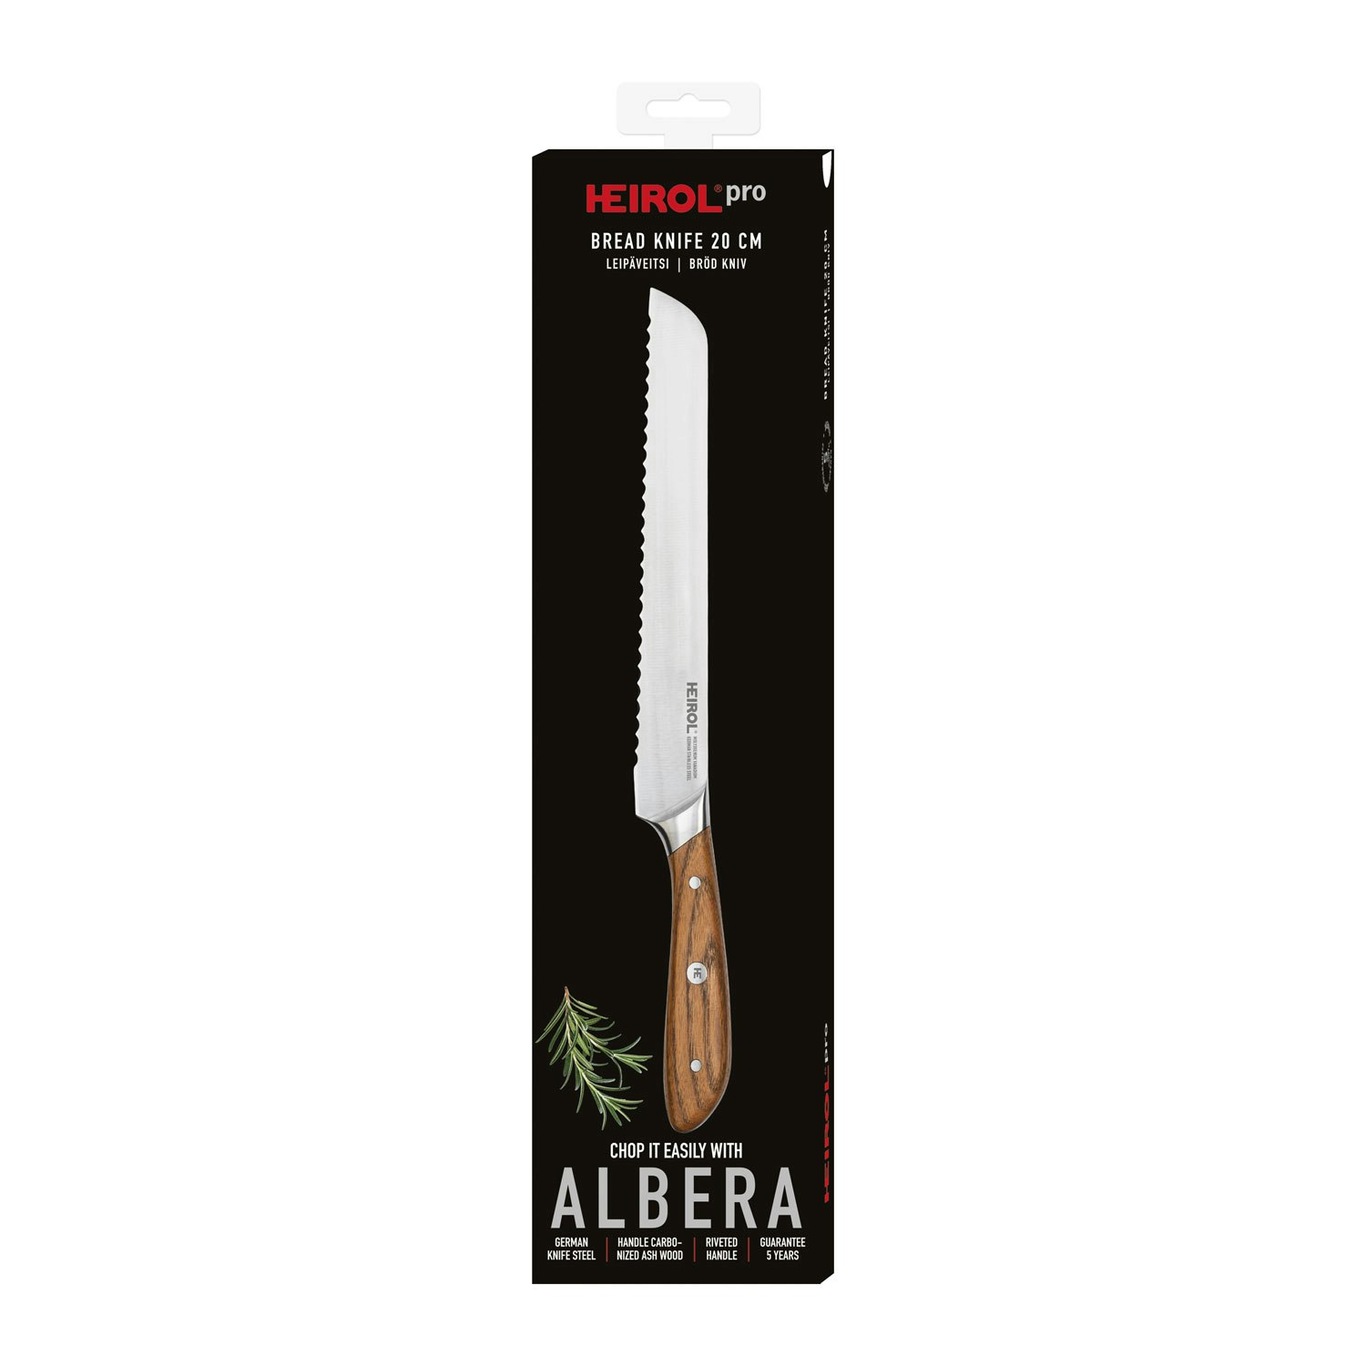 https://royaldesign.com/image/2/heirol-albera-bread-knife-20-cm-1?w=800&quality=80